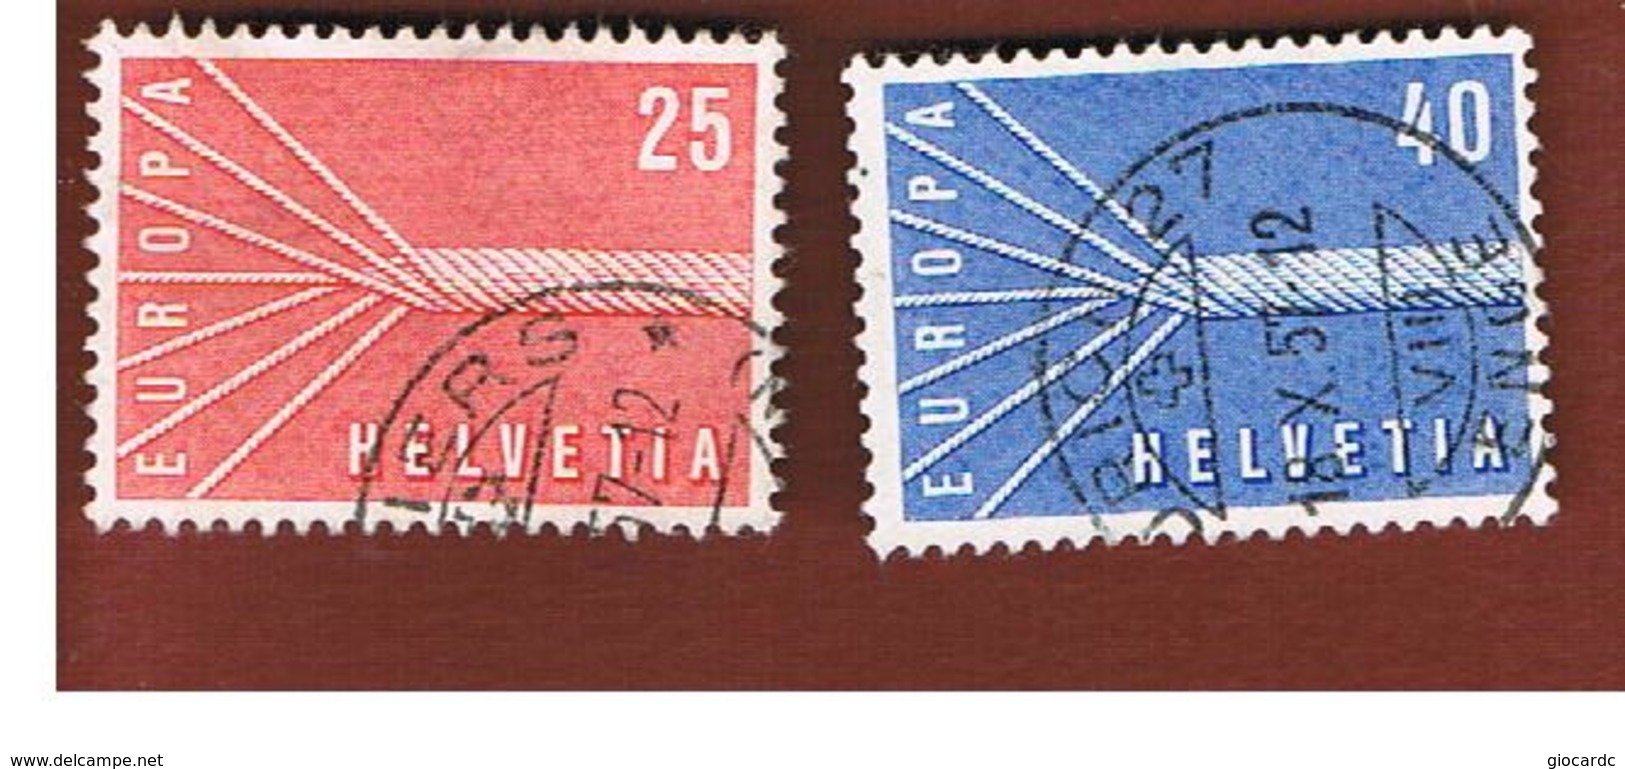 SVIZZERA  (SWITZERLAND) - 1957 EUROPA  - USED - 1957